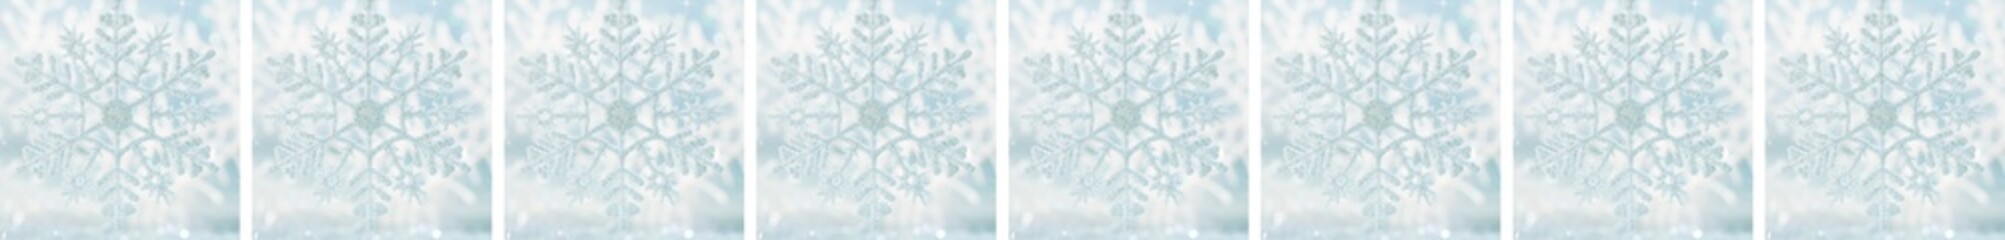 Border snowflake on a blue festive background. Beautiful Christmas background